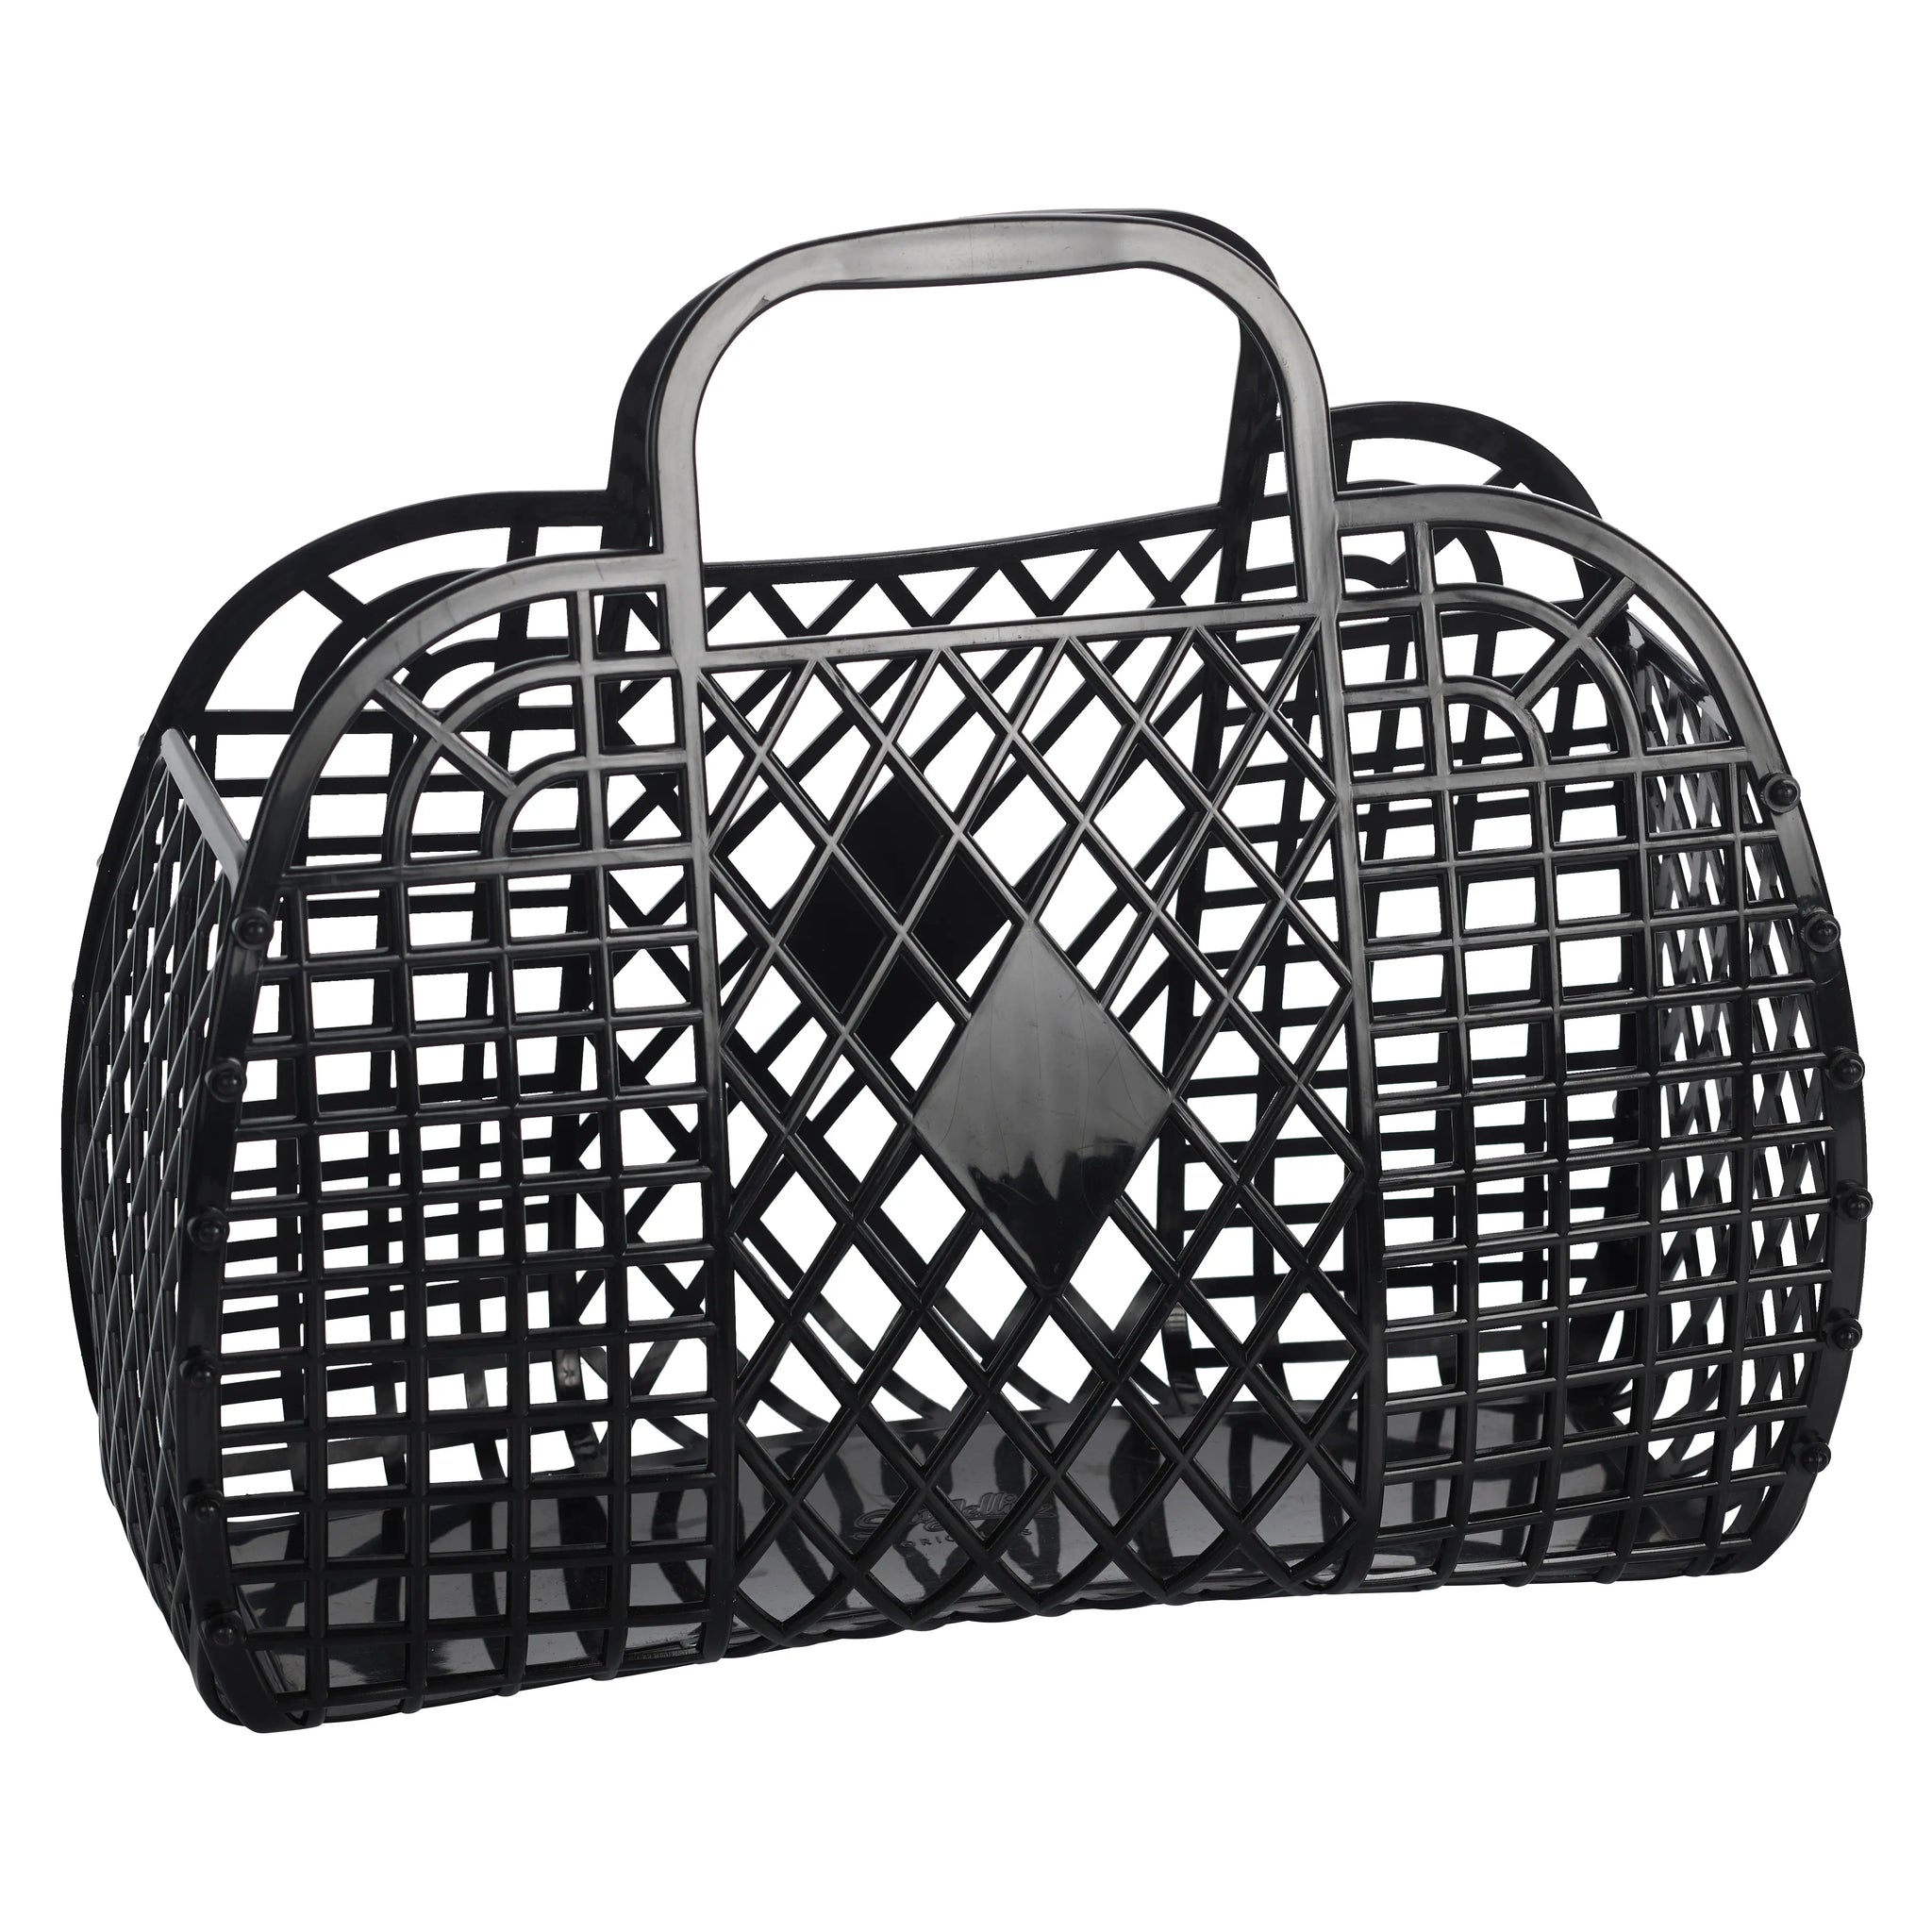 A large black rectangular handbag made of plastic with a retro diamond and lattice pattern